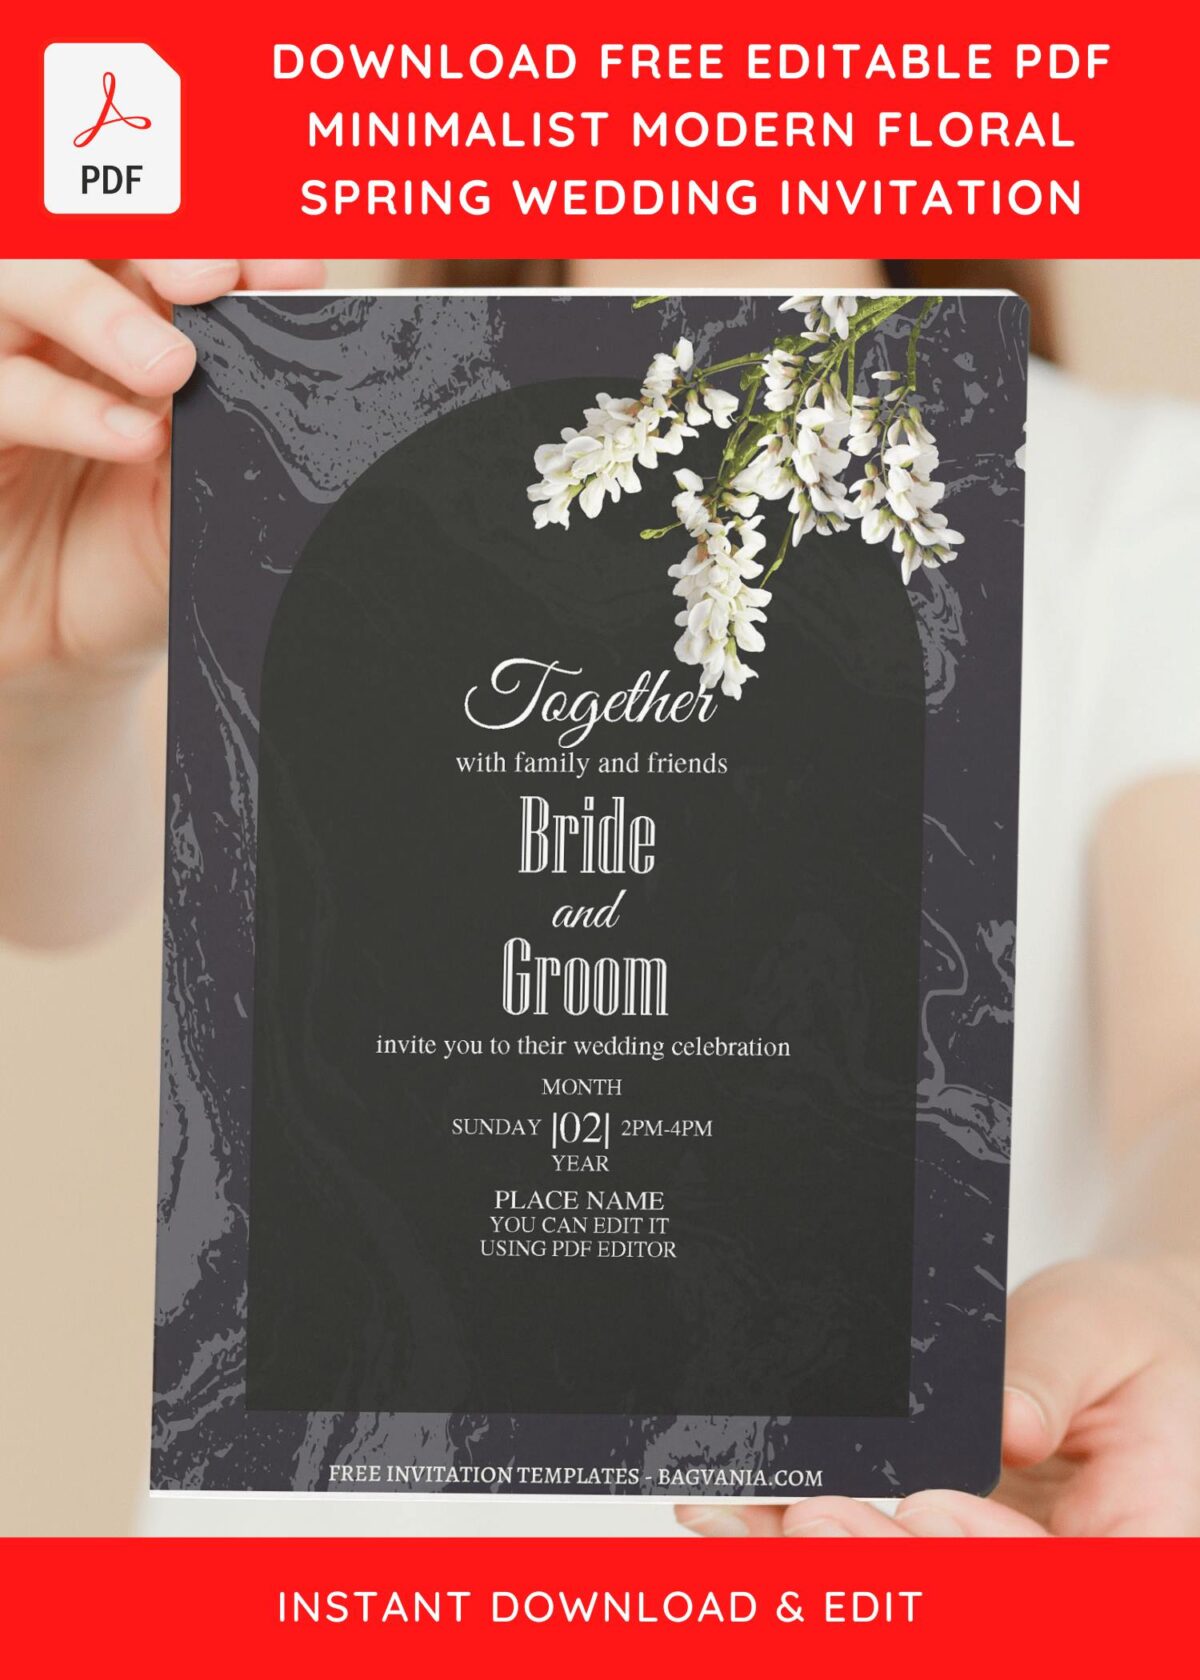 (Free Editable PDF) Luxury Black Marble Floral Wedding Invitation Templates with editable text